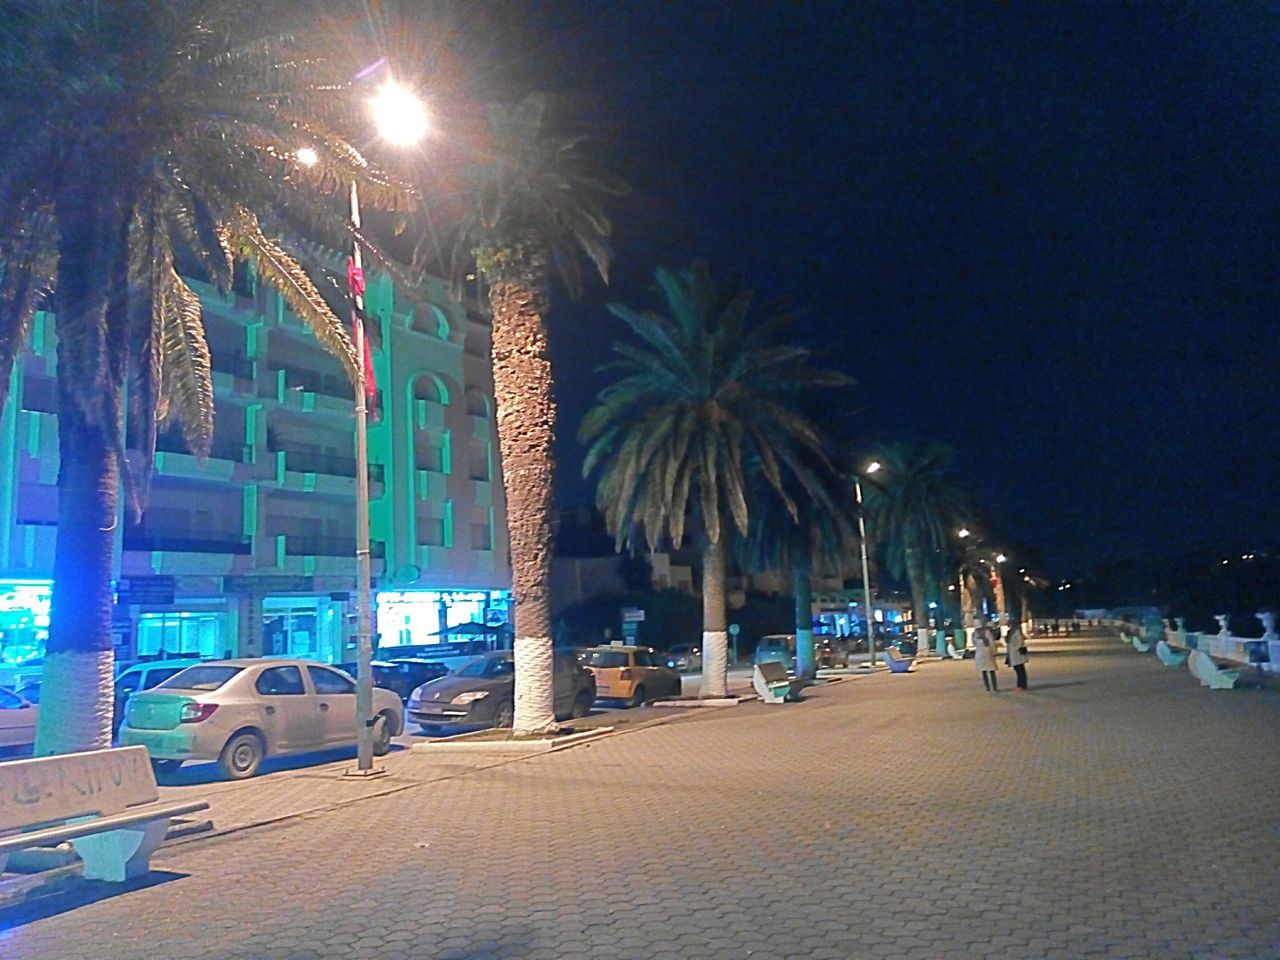 illuminated, night, palm tree, city, tree, architecture, no people, sky, outdoors, fame, midnight